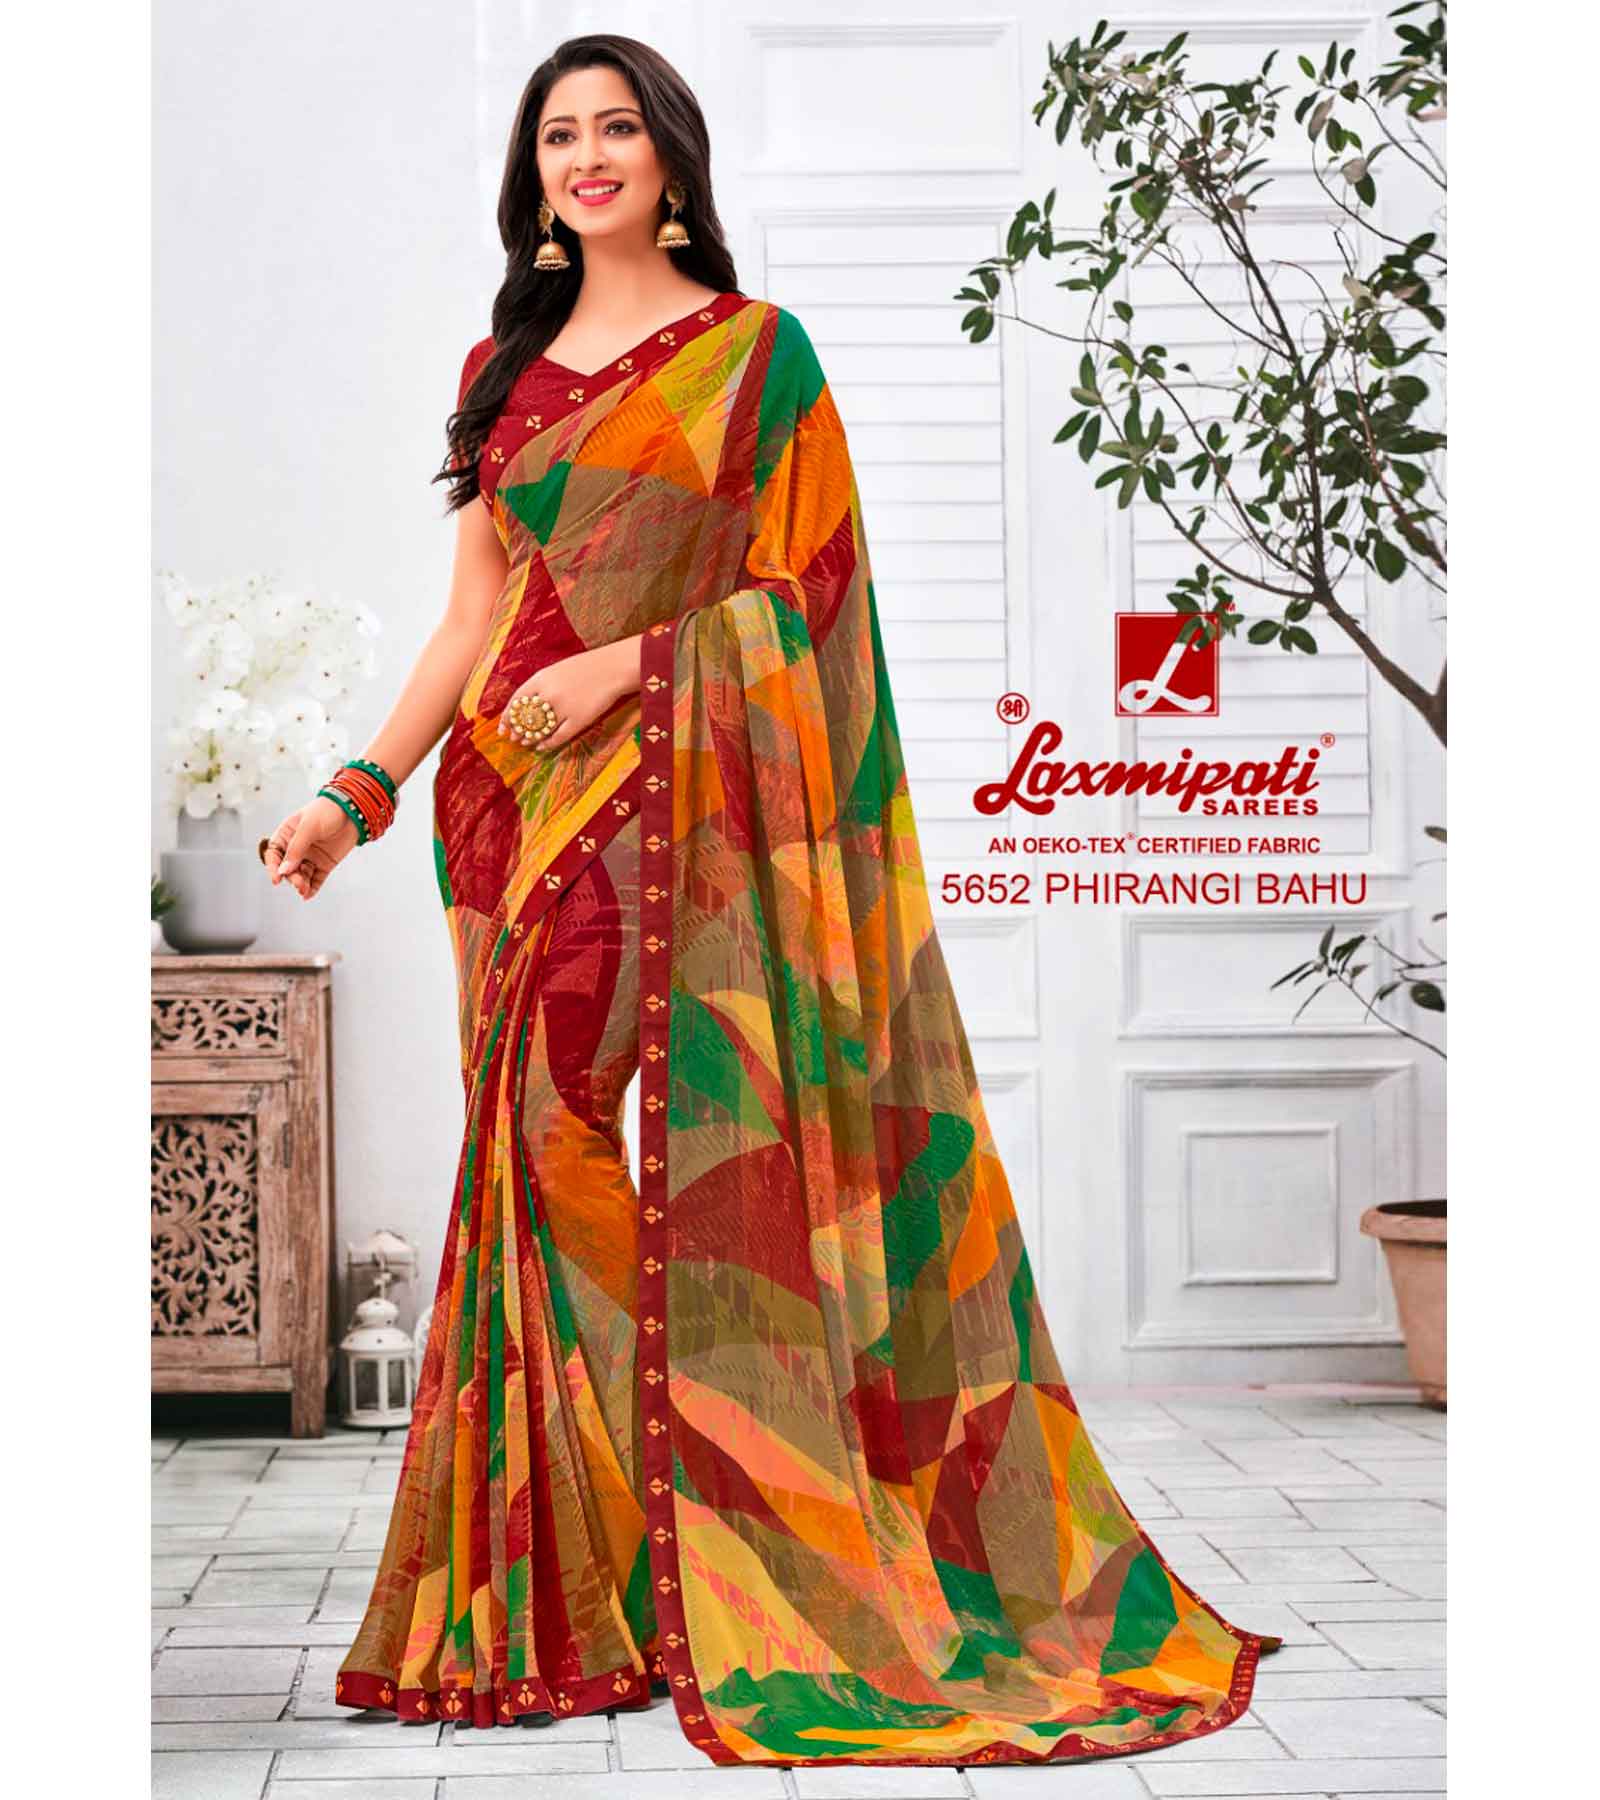 Laxmipati Saree Lahar 6520-6551 Series By Laxmipati Saree For Full Set  Catalog - ashdesigners.in